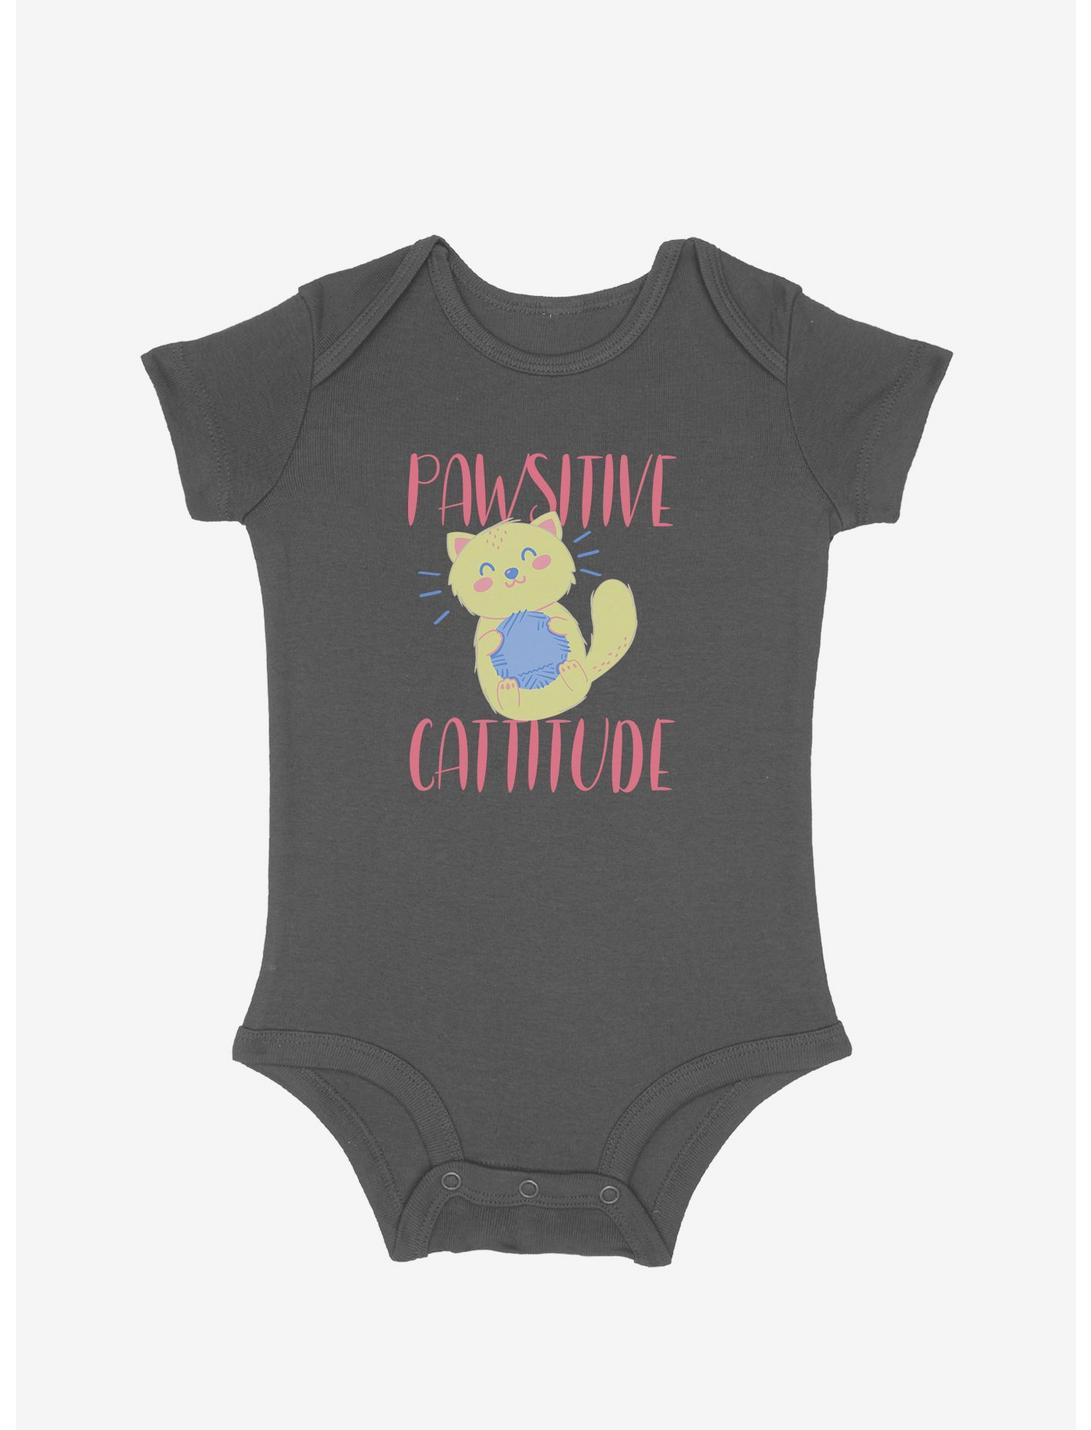 Pawsitive Catitude Infant Bodysuit, GRAPHITE HEATHER, hi-res